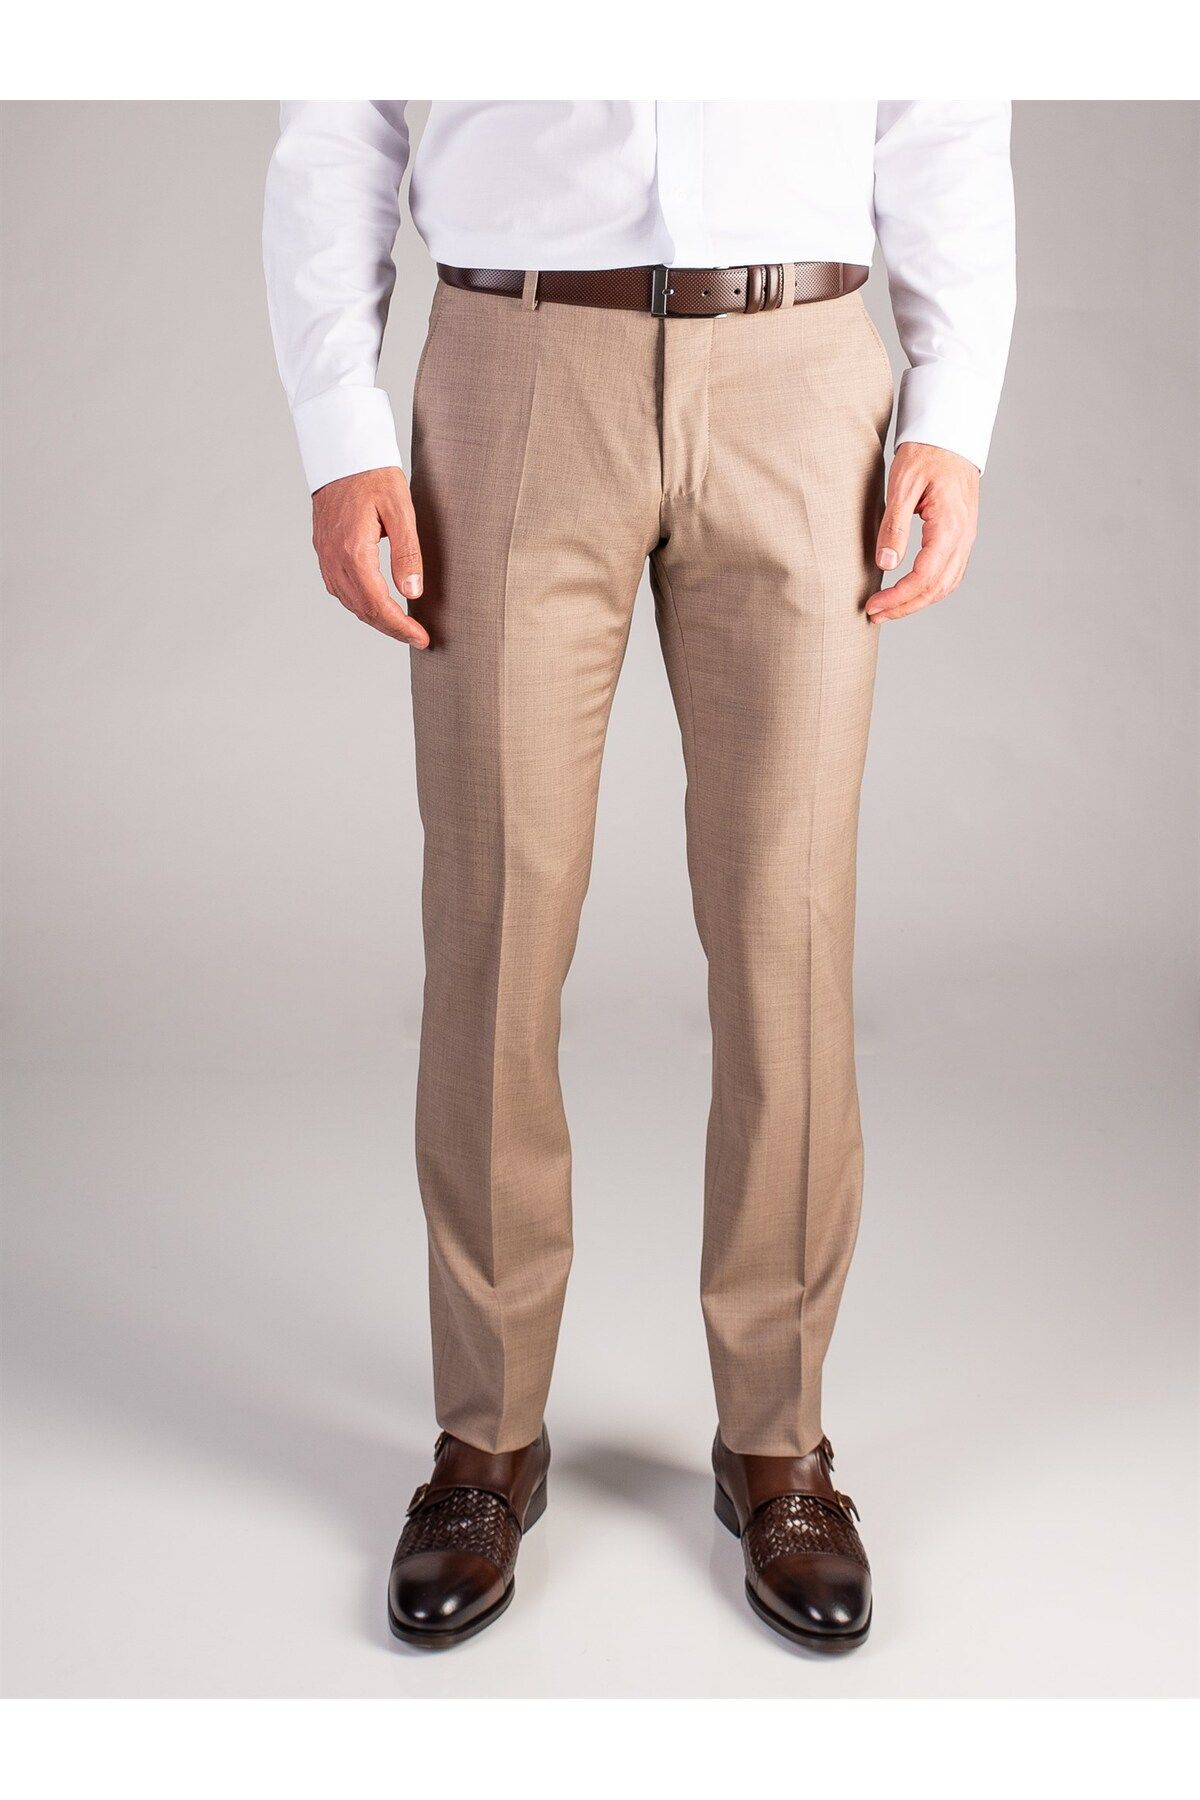 Dufy Sütlü Kahverengi Erkek Regular Fit Düz Pantolon - 36609